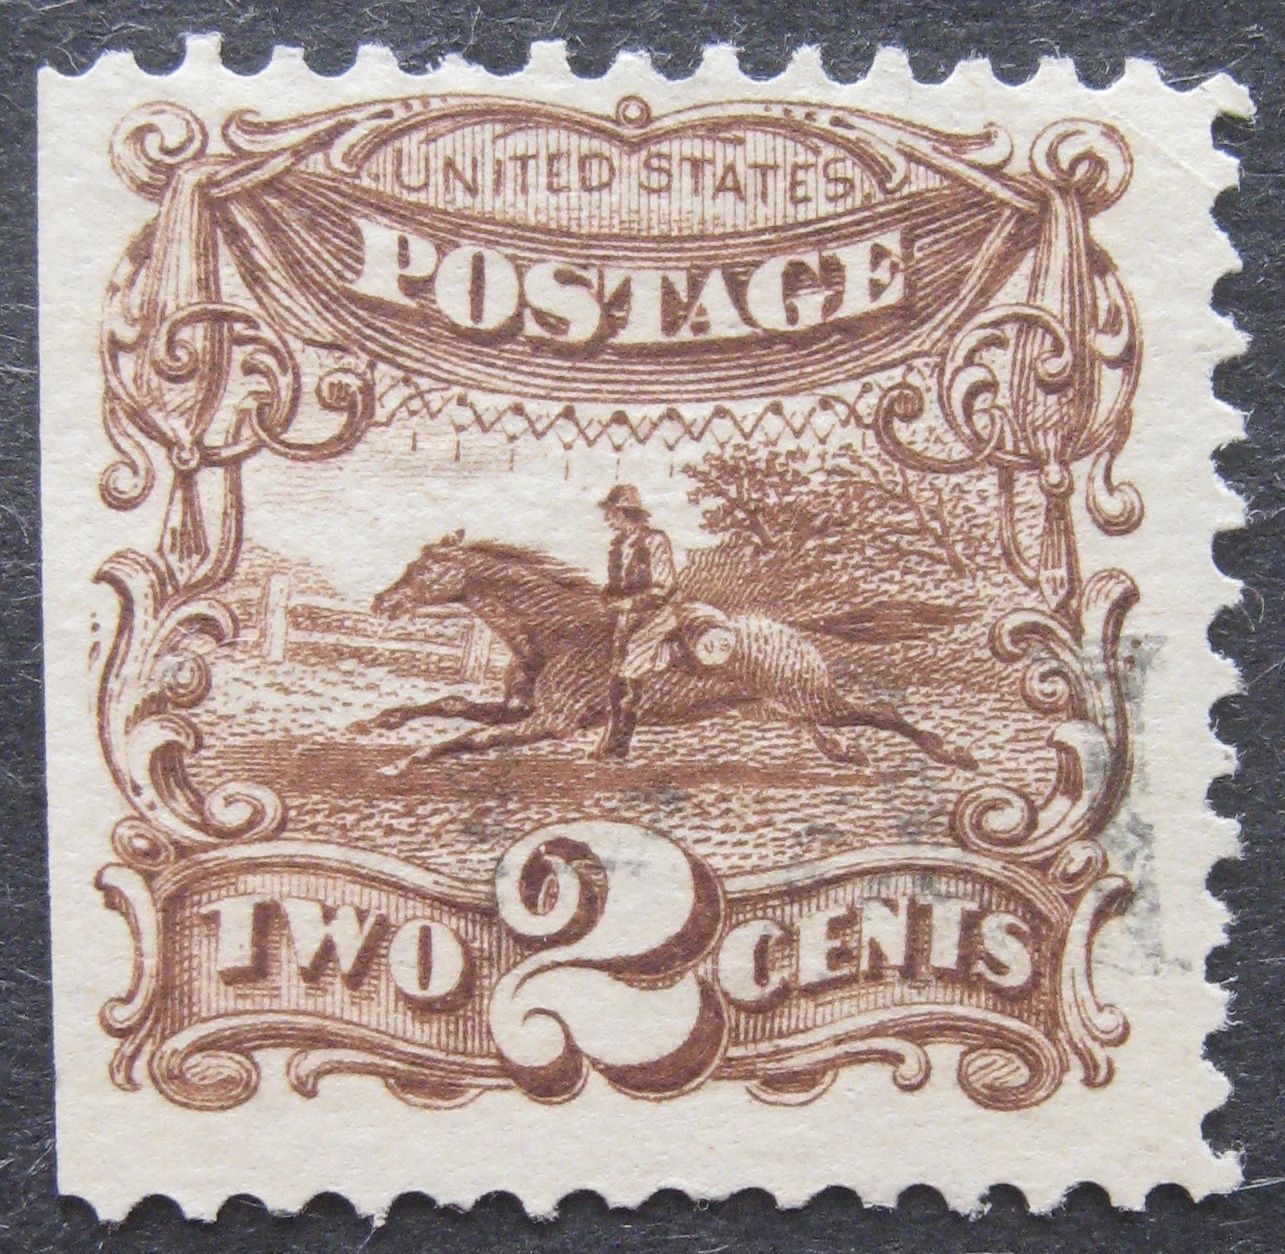 United States - Scott #113 (1869) - very light PAID cancel [Image from eBay]